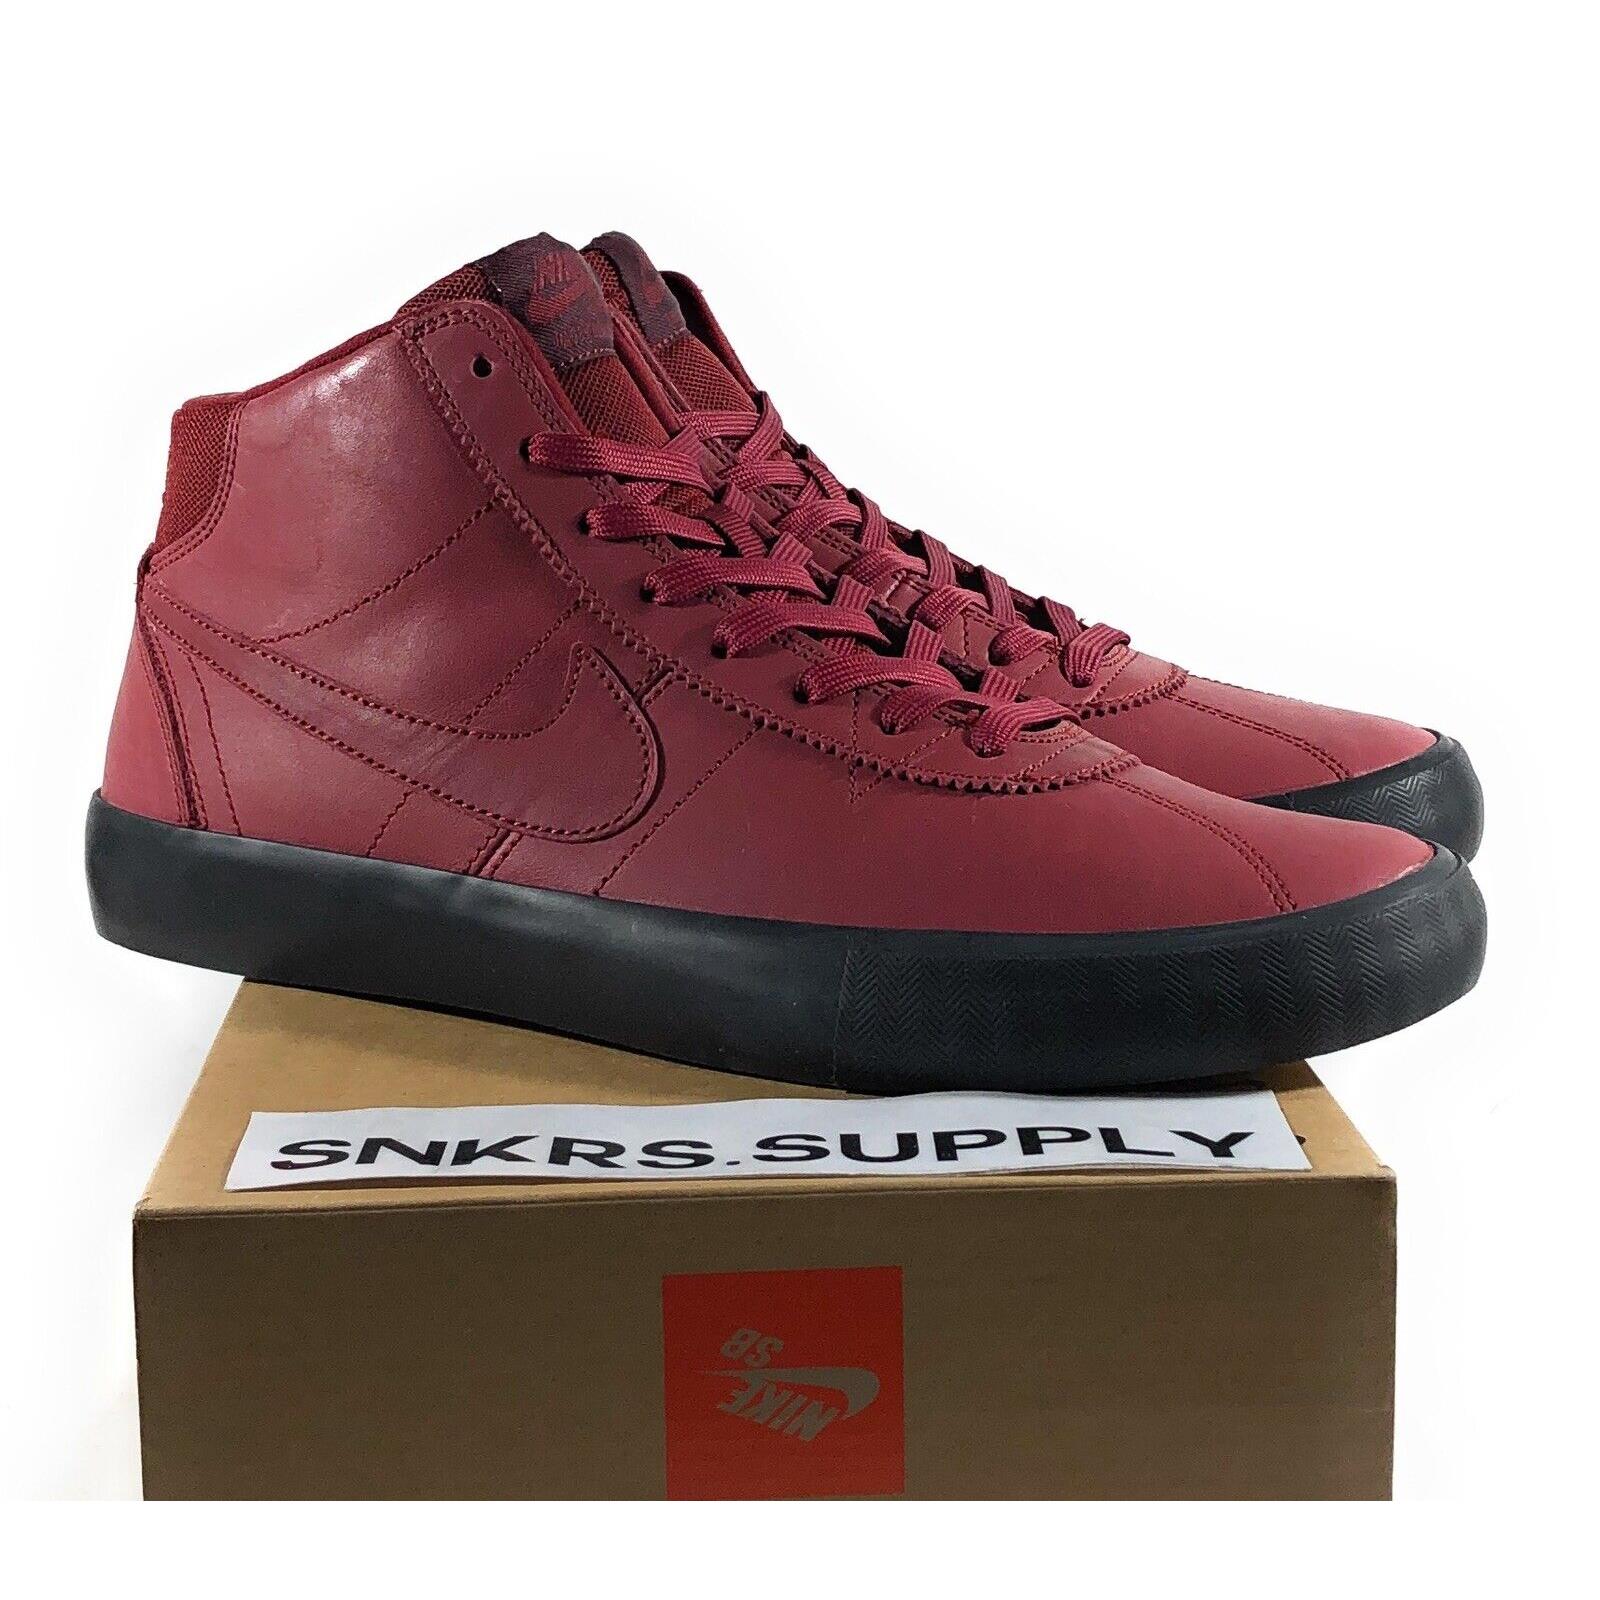 Nike shoes Bruin - Team Red, Night Maroon, Black , Team Red / Night Maroon / Black Manufacturer 4